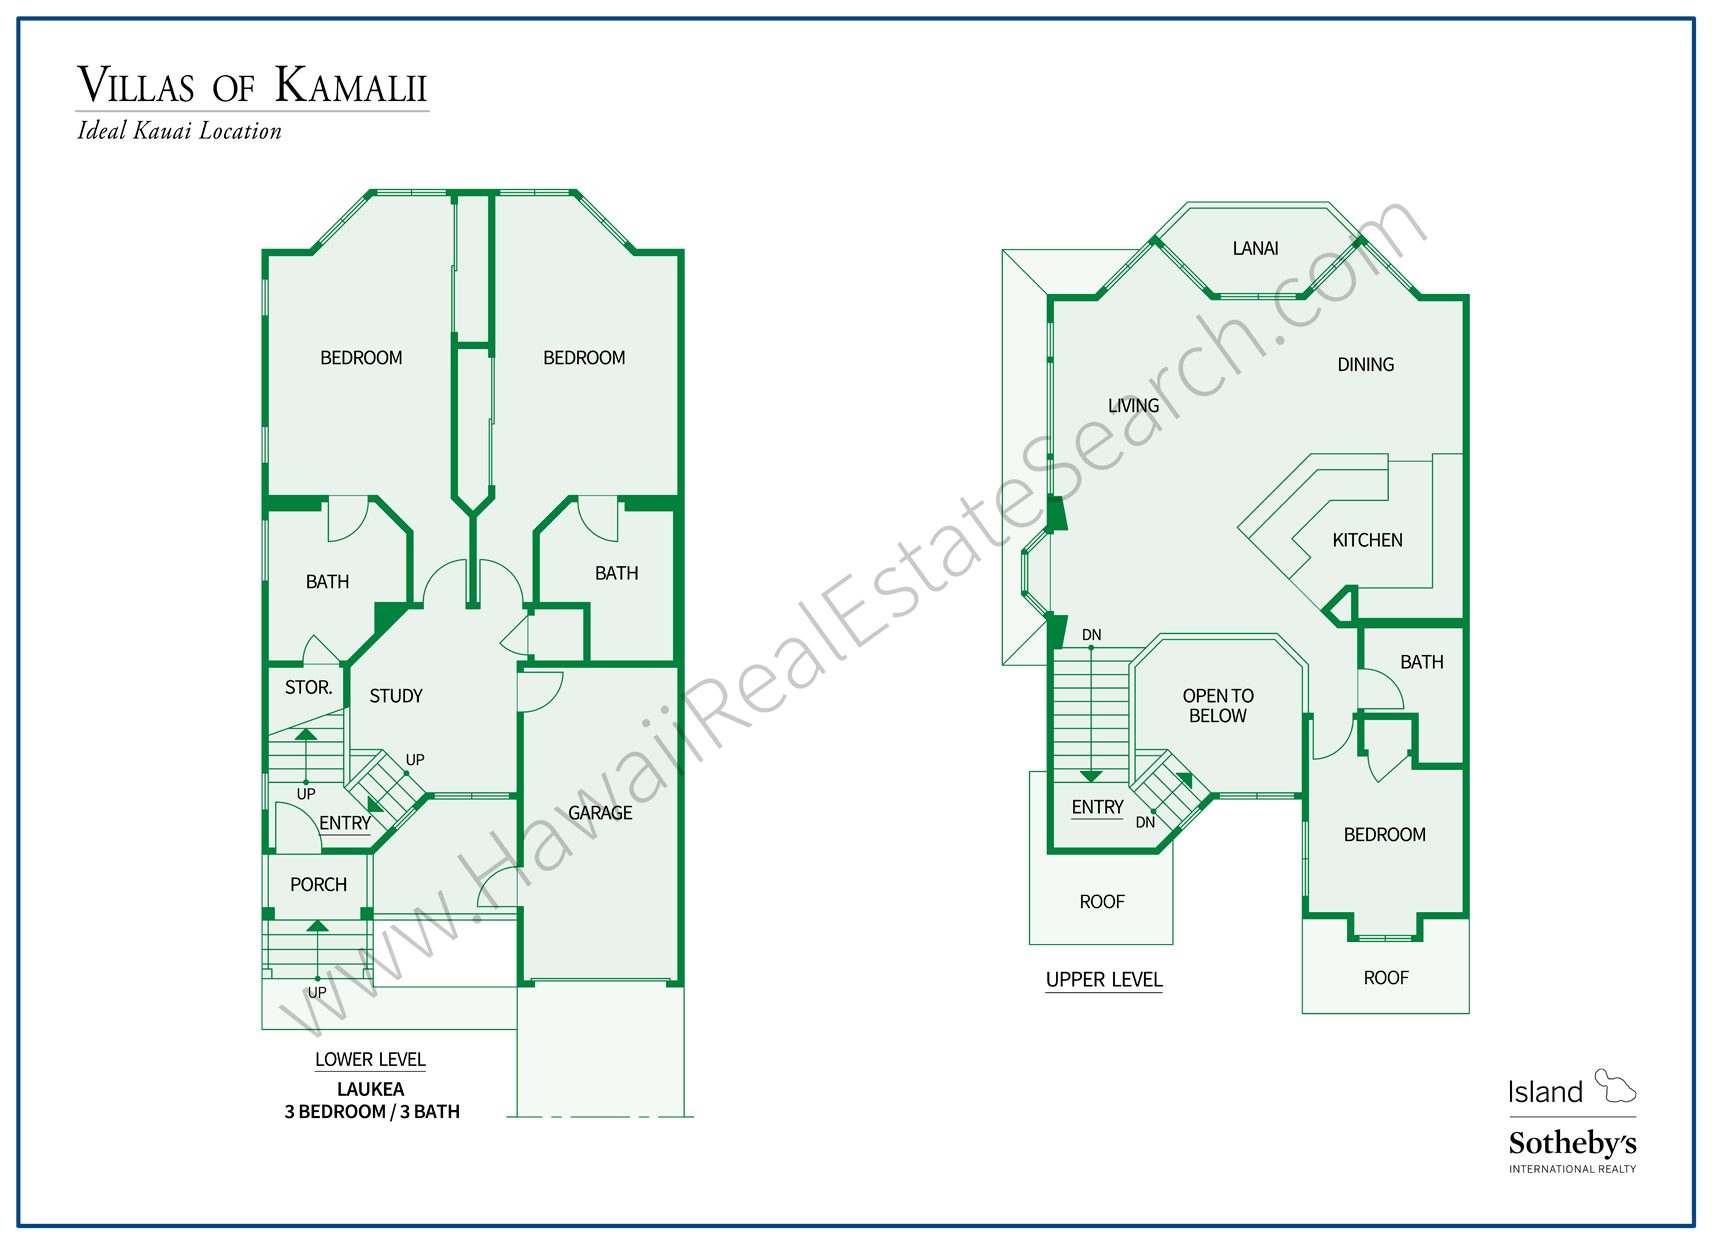 Villas of Kamalii Floor Plan